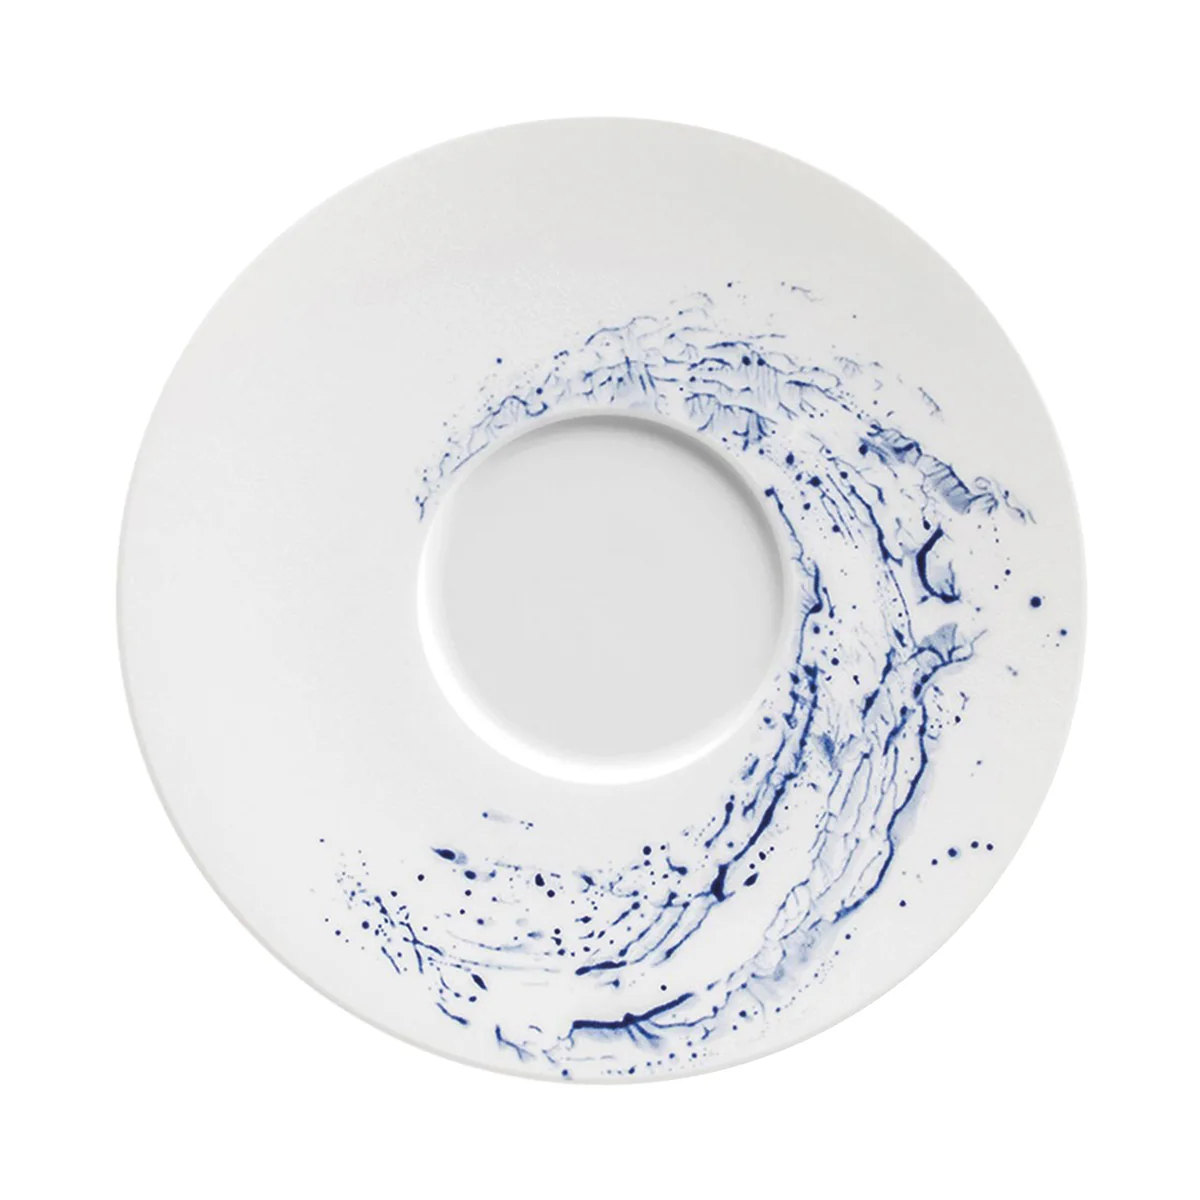 BLUE IMPRESSION - Appetizer Plate